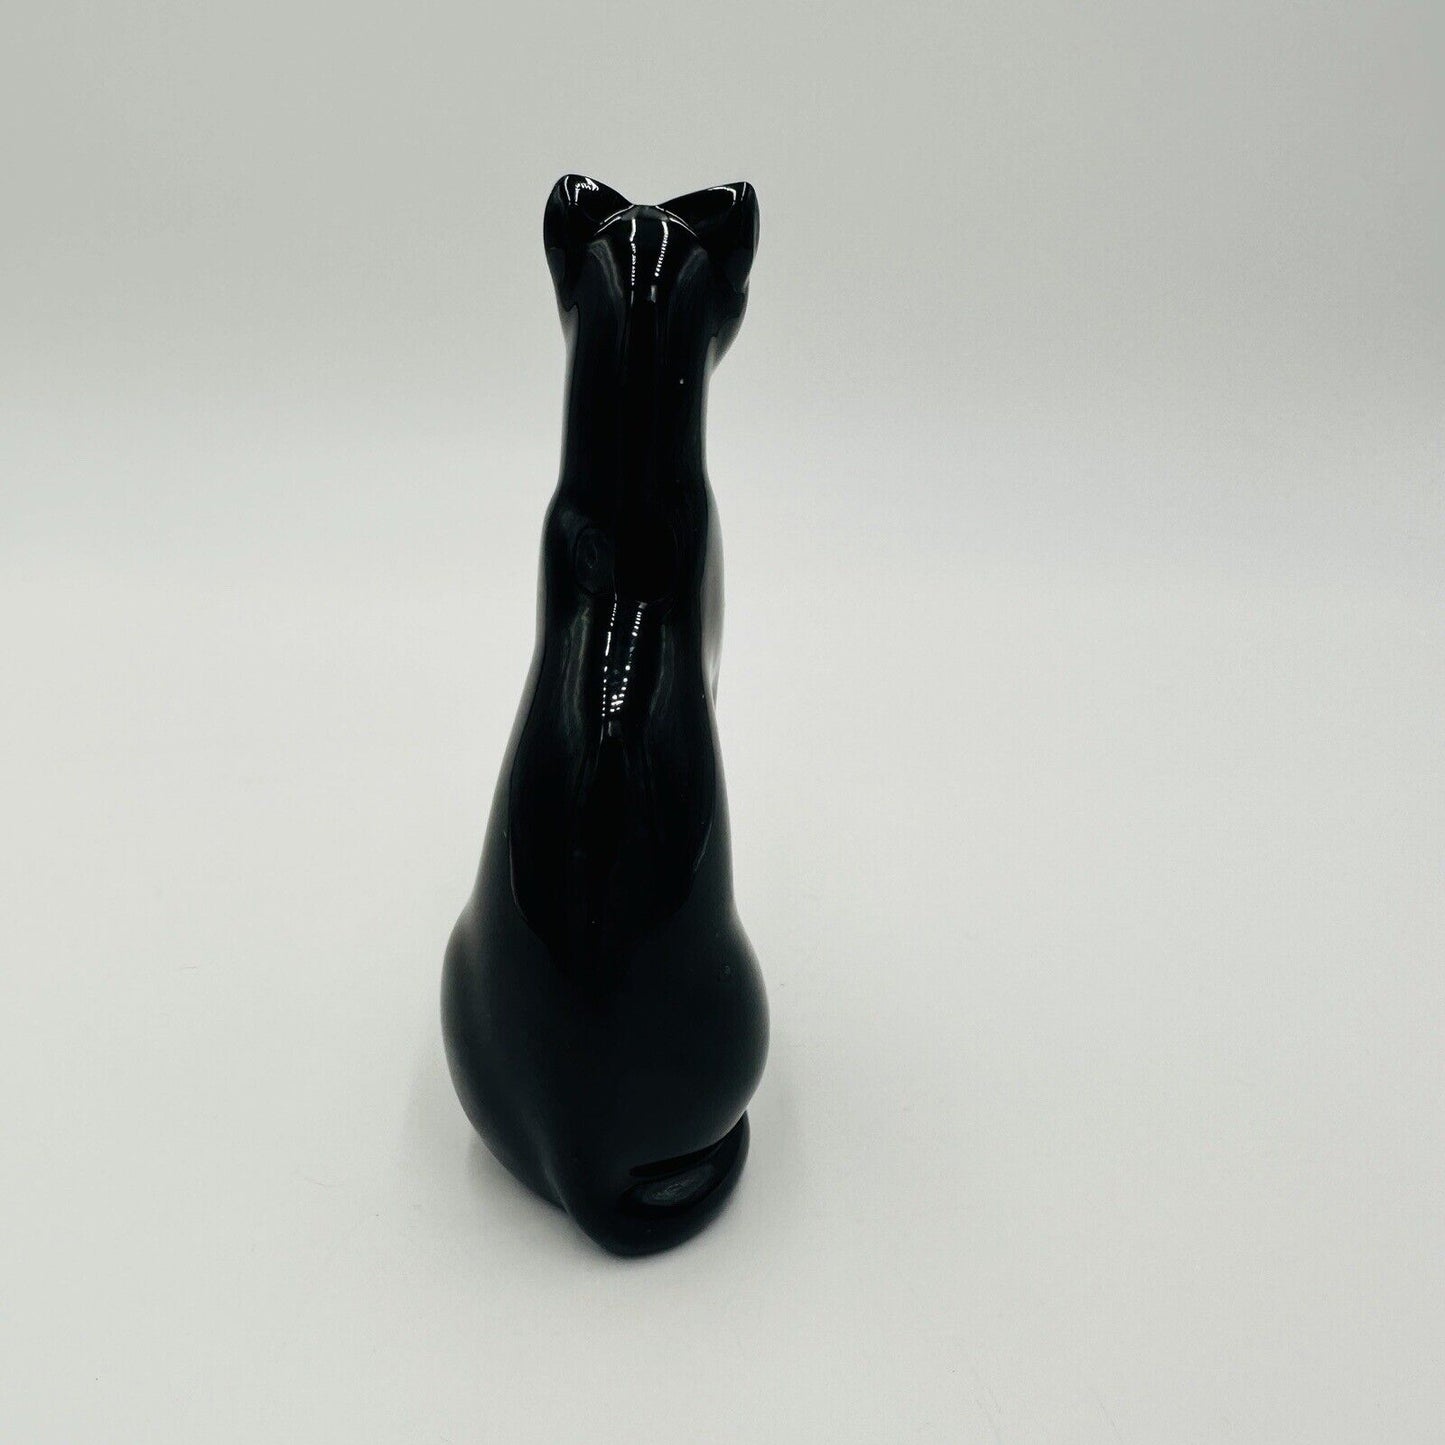 Baccarat Crystal French Black Cat Figurine Made In France Vintage Signed